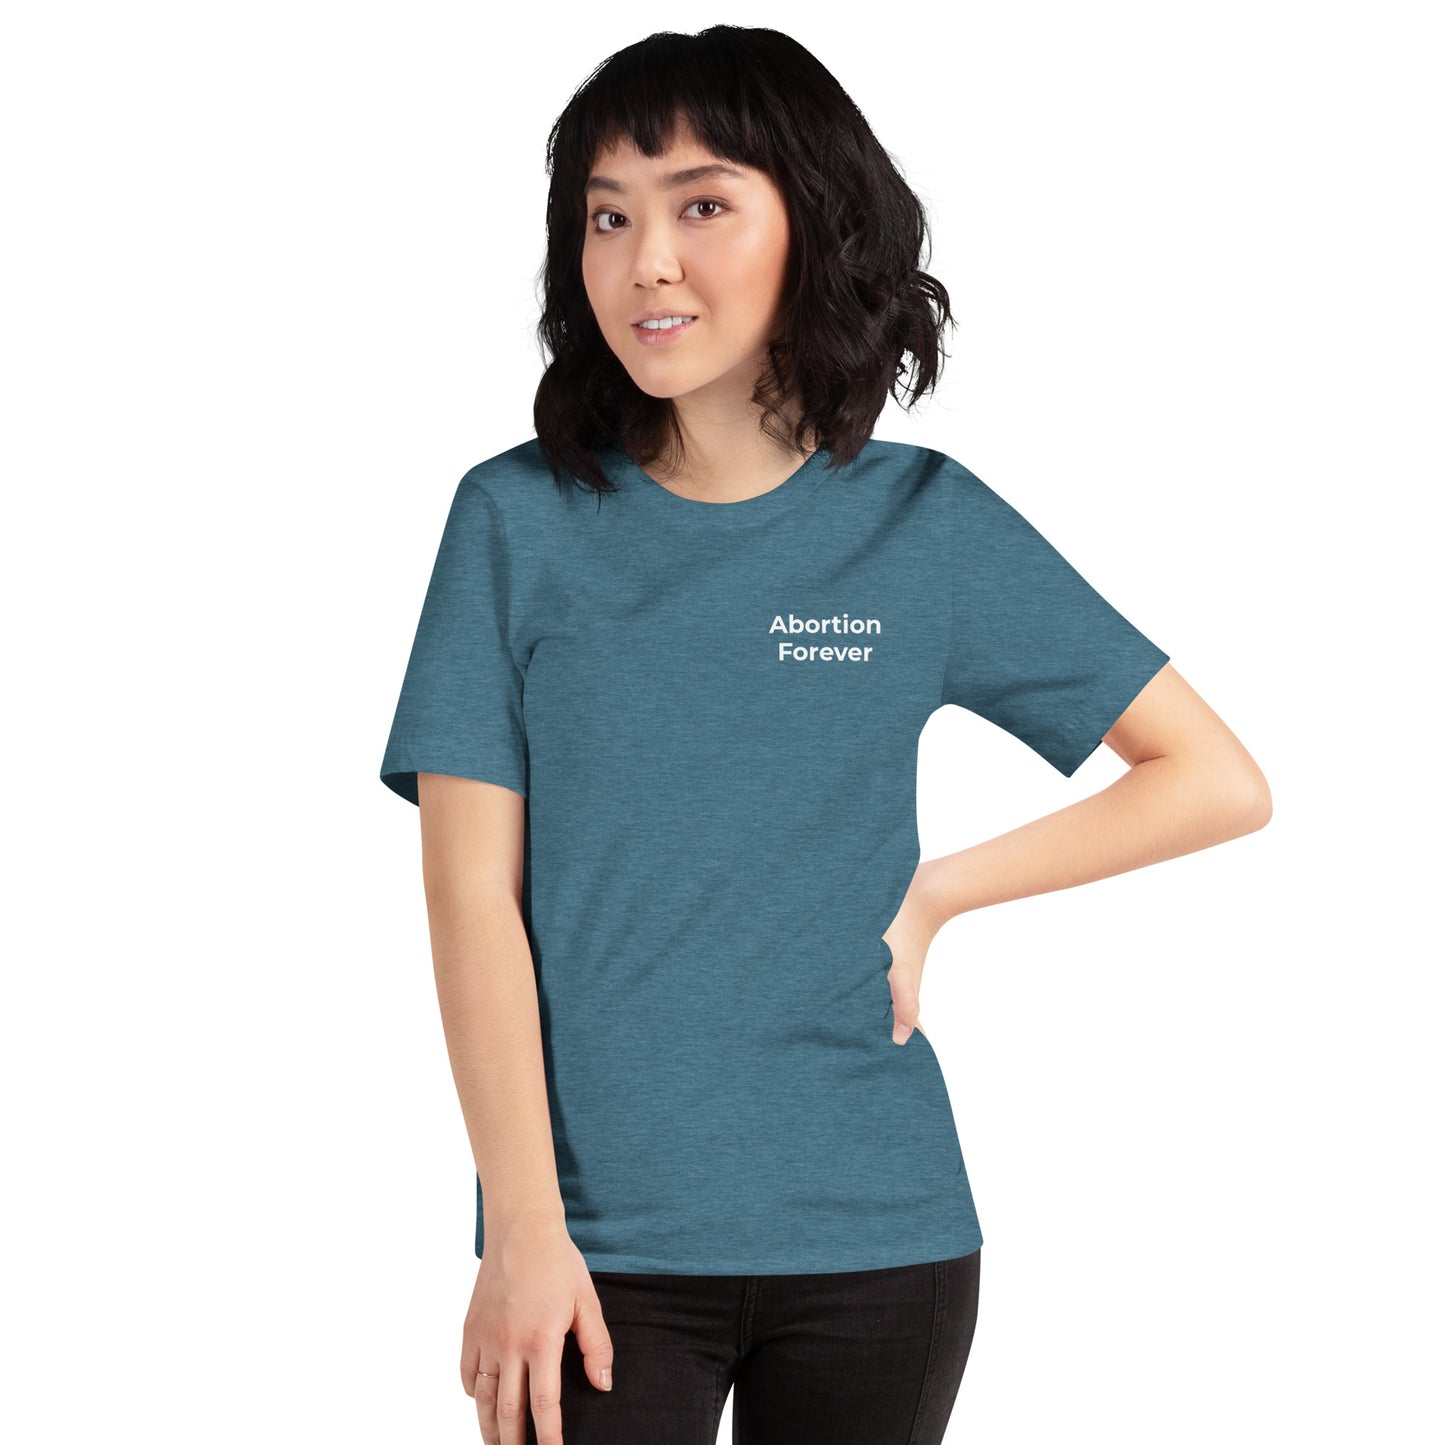 Abortion Forever unisex t-shirt